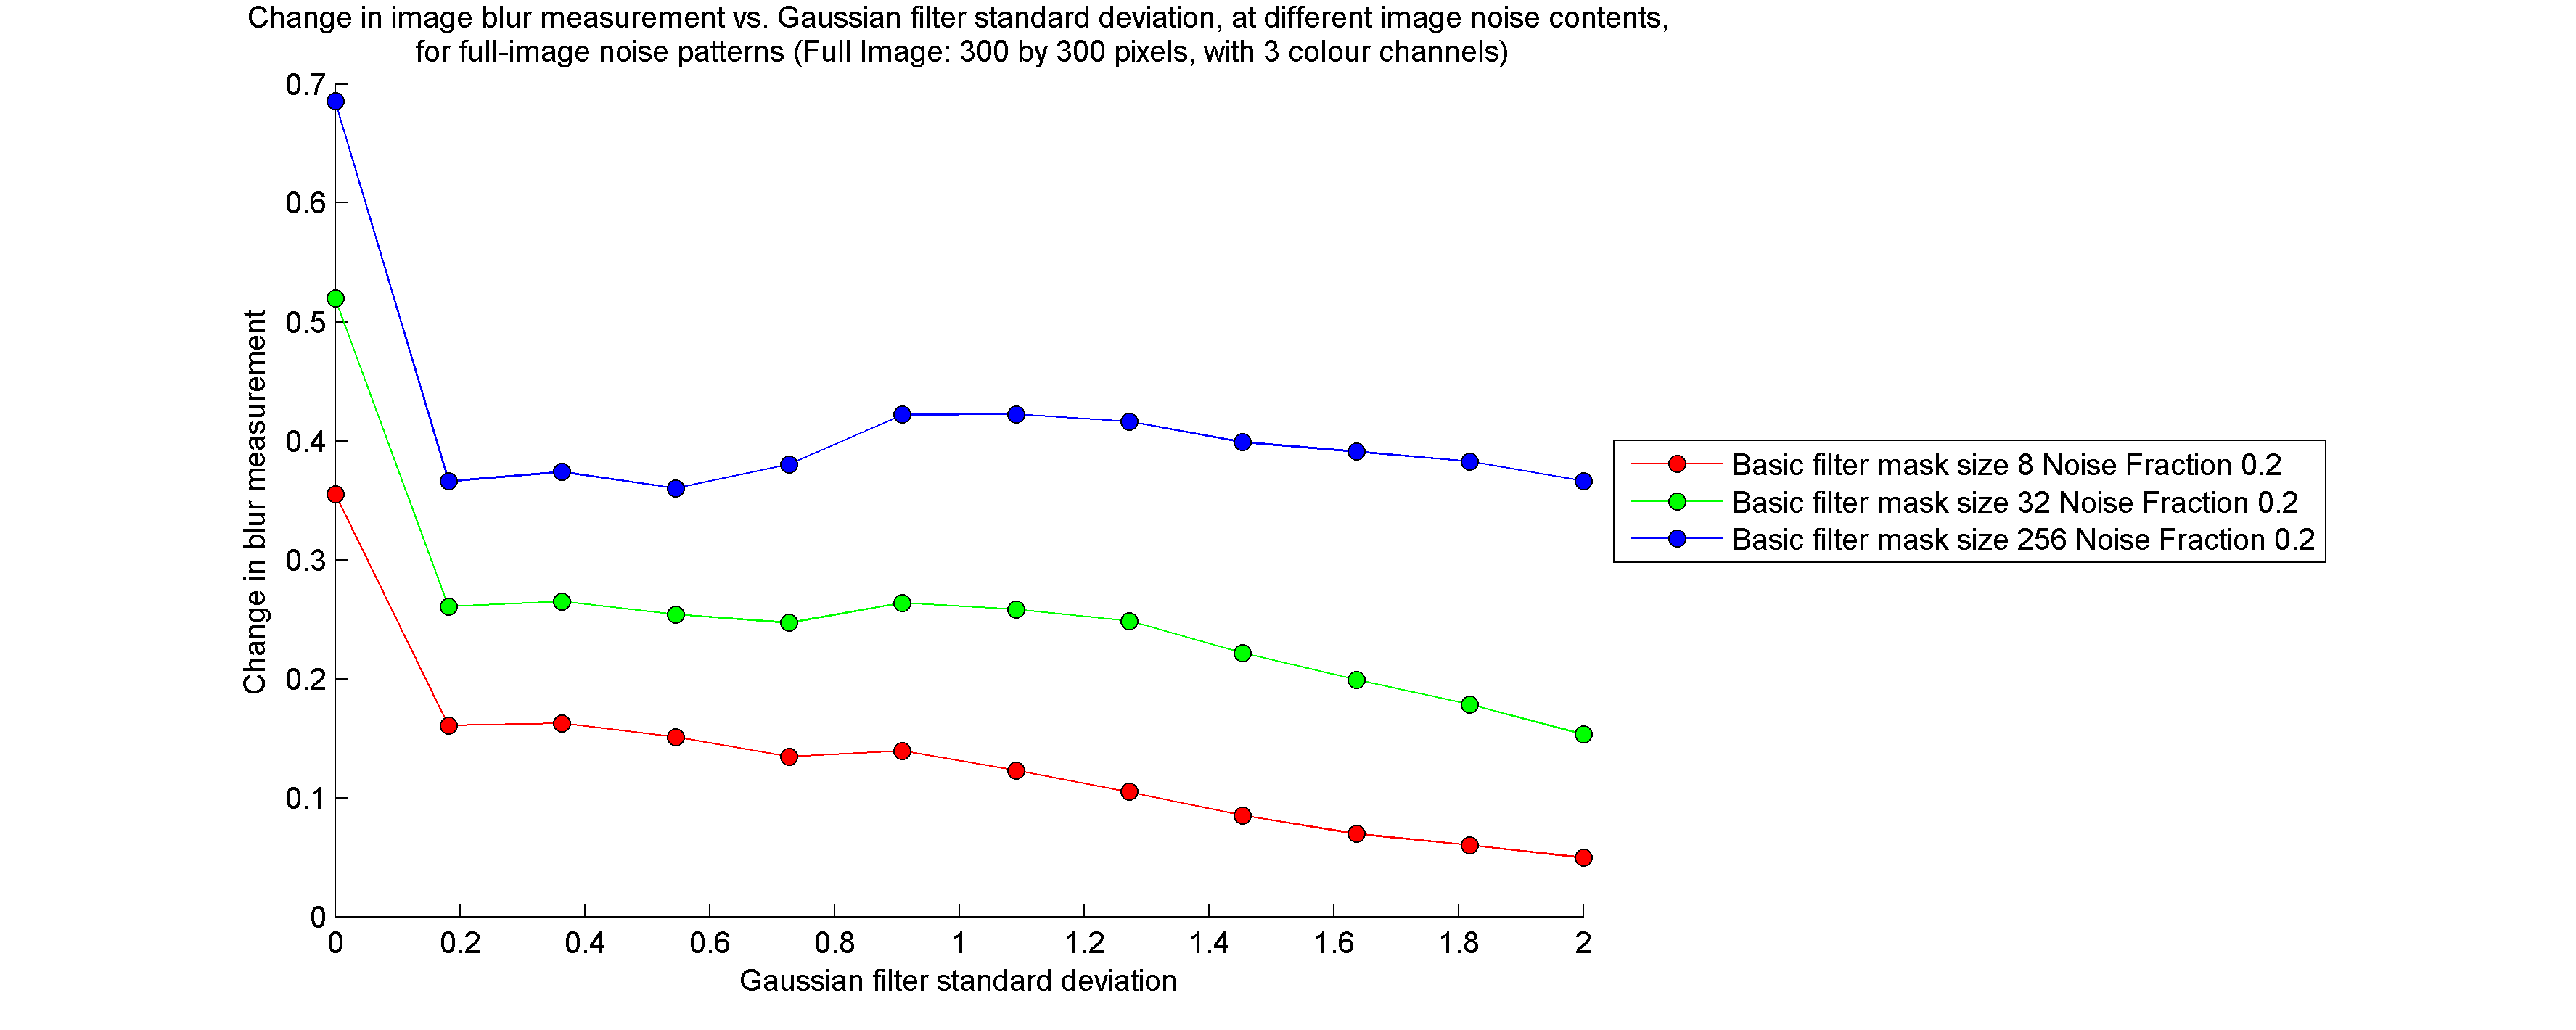 Blur change vs Gaussian standard deviation